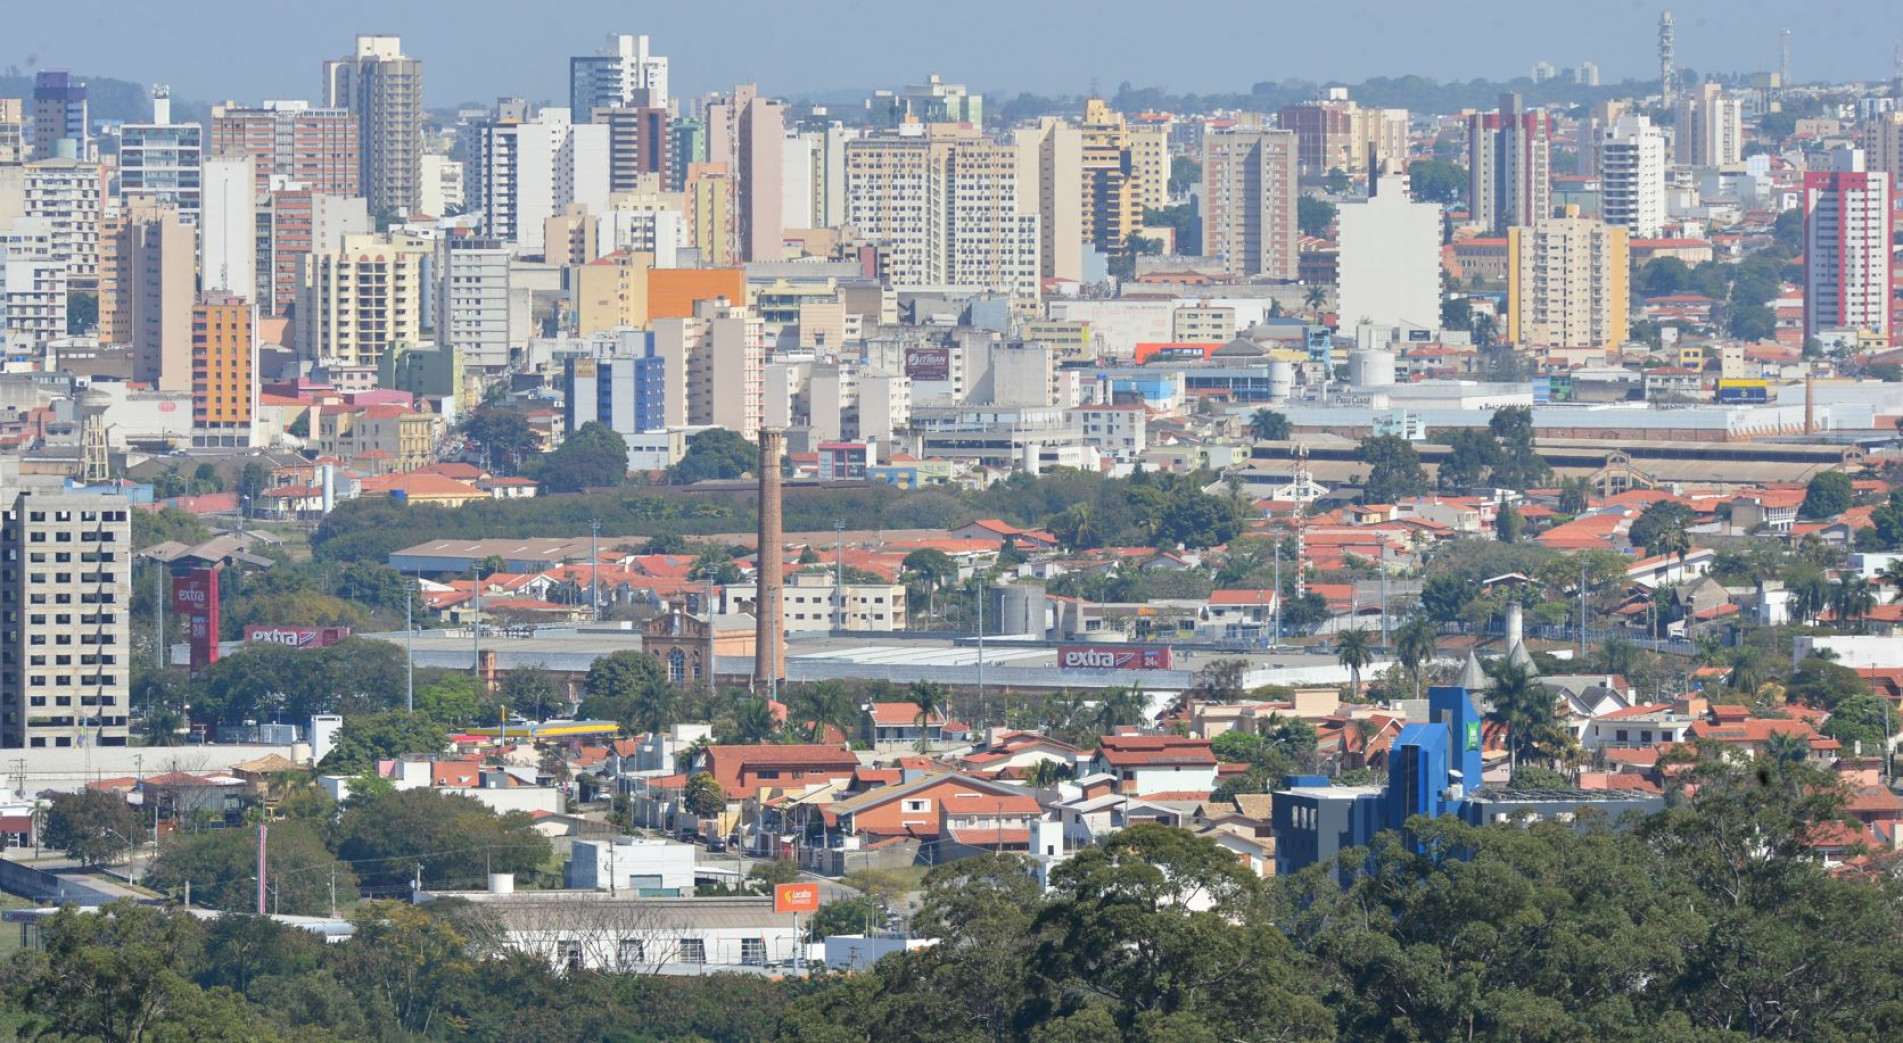 Vista aérea da cidade de Sorocaba.